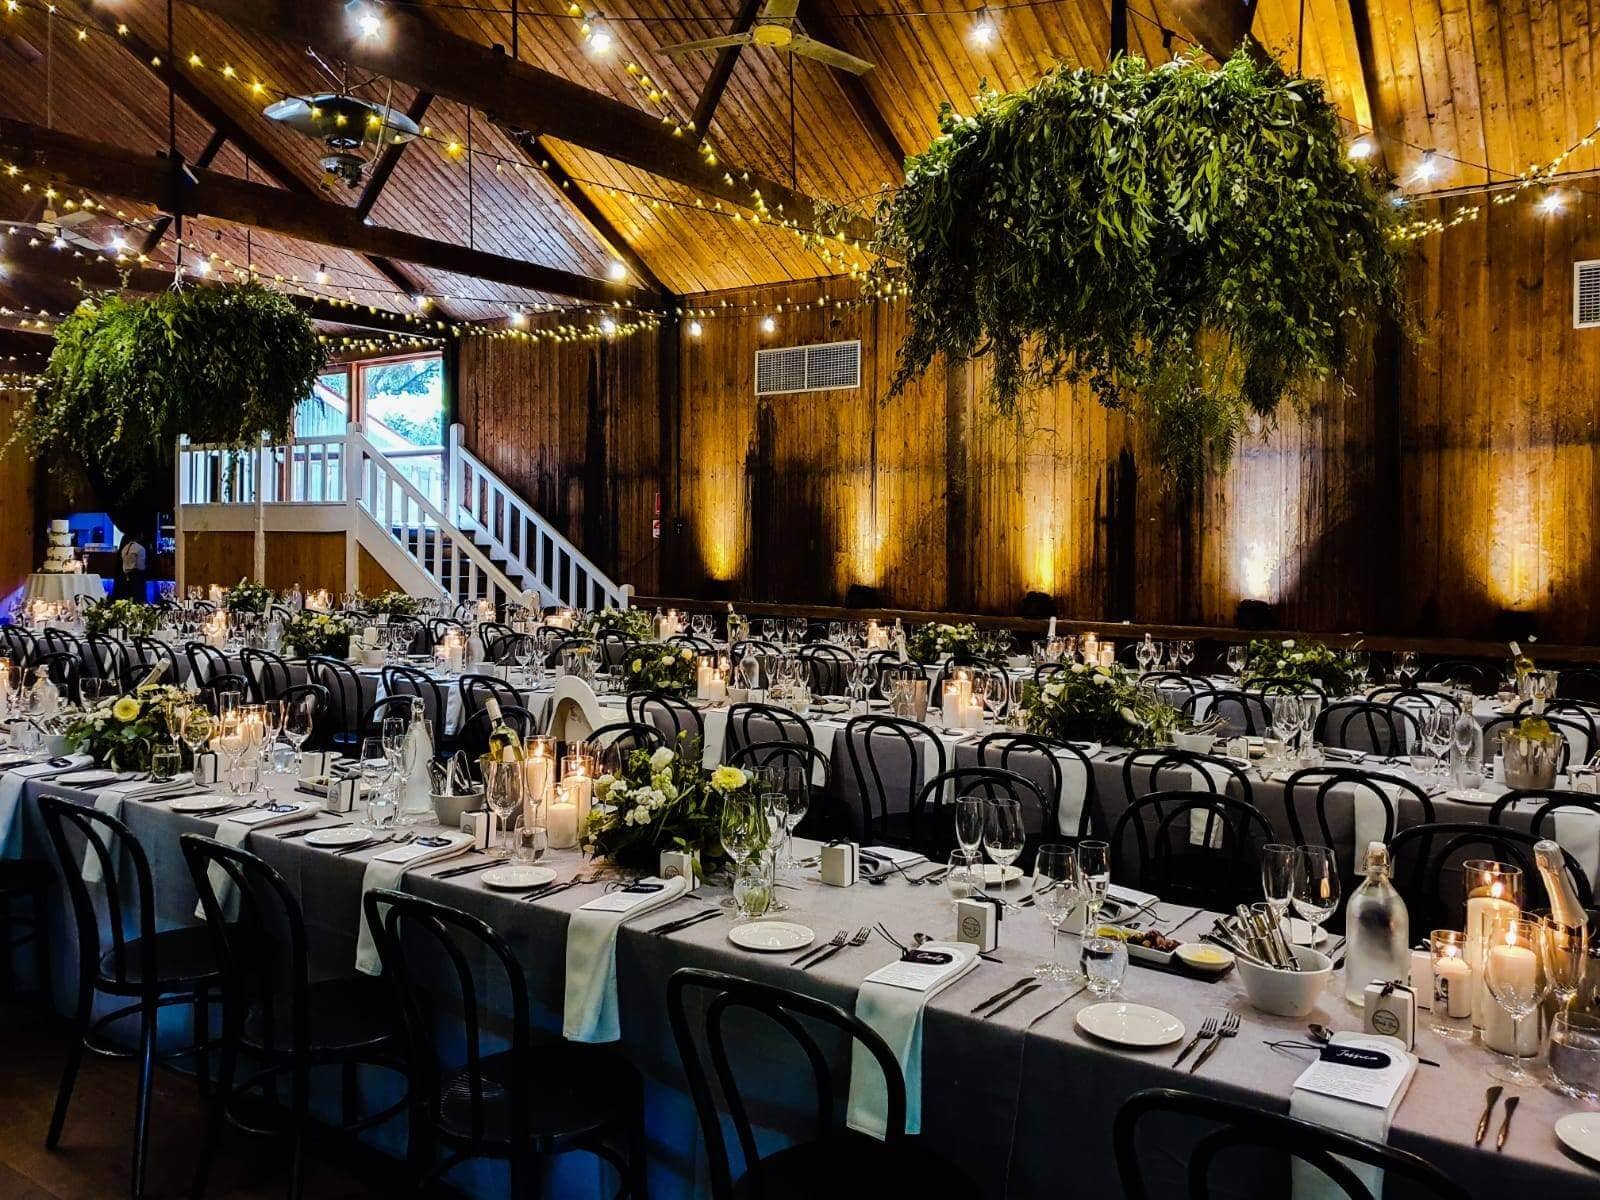 Best-rustic-country-wedding-venues-in-australia-Glen-Ewin-Estate-South-Australia